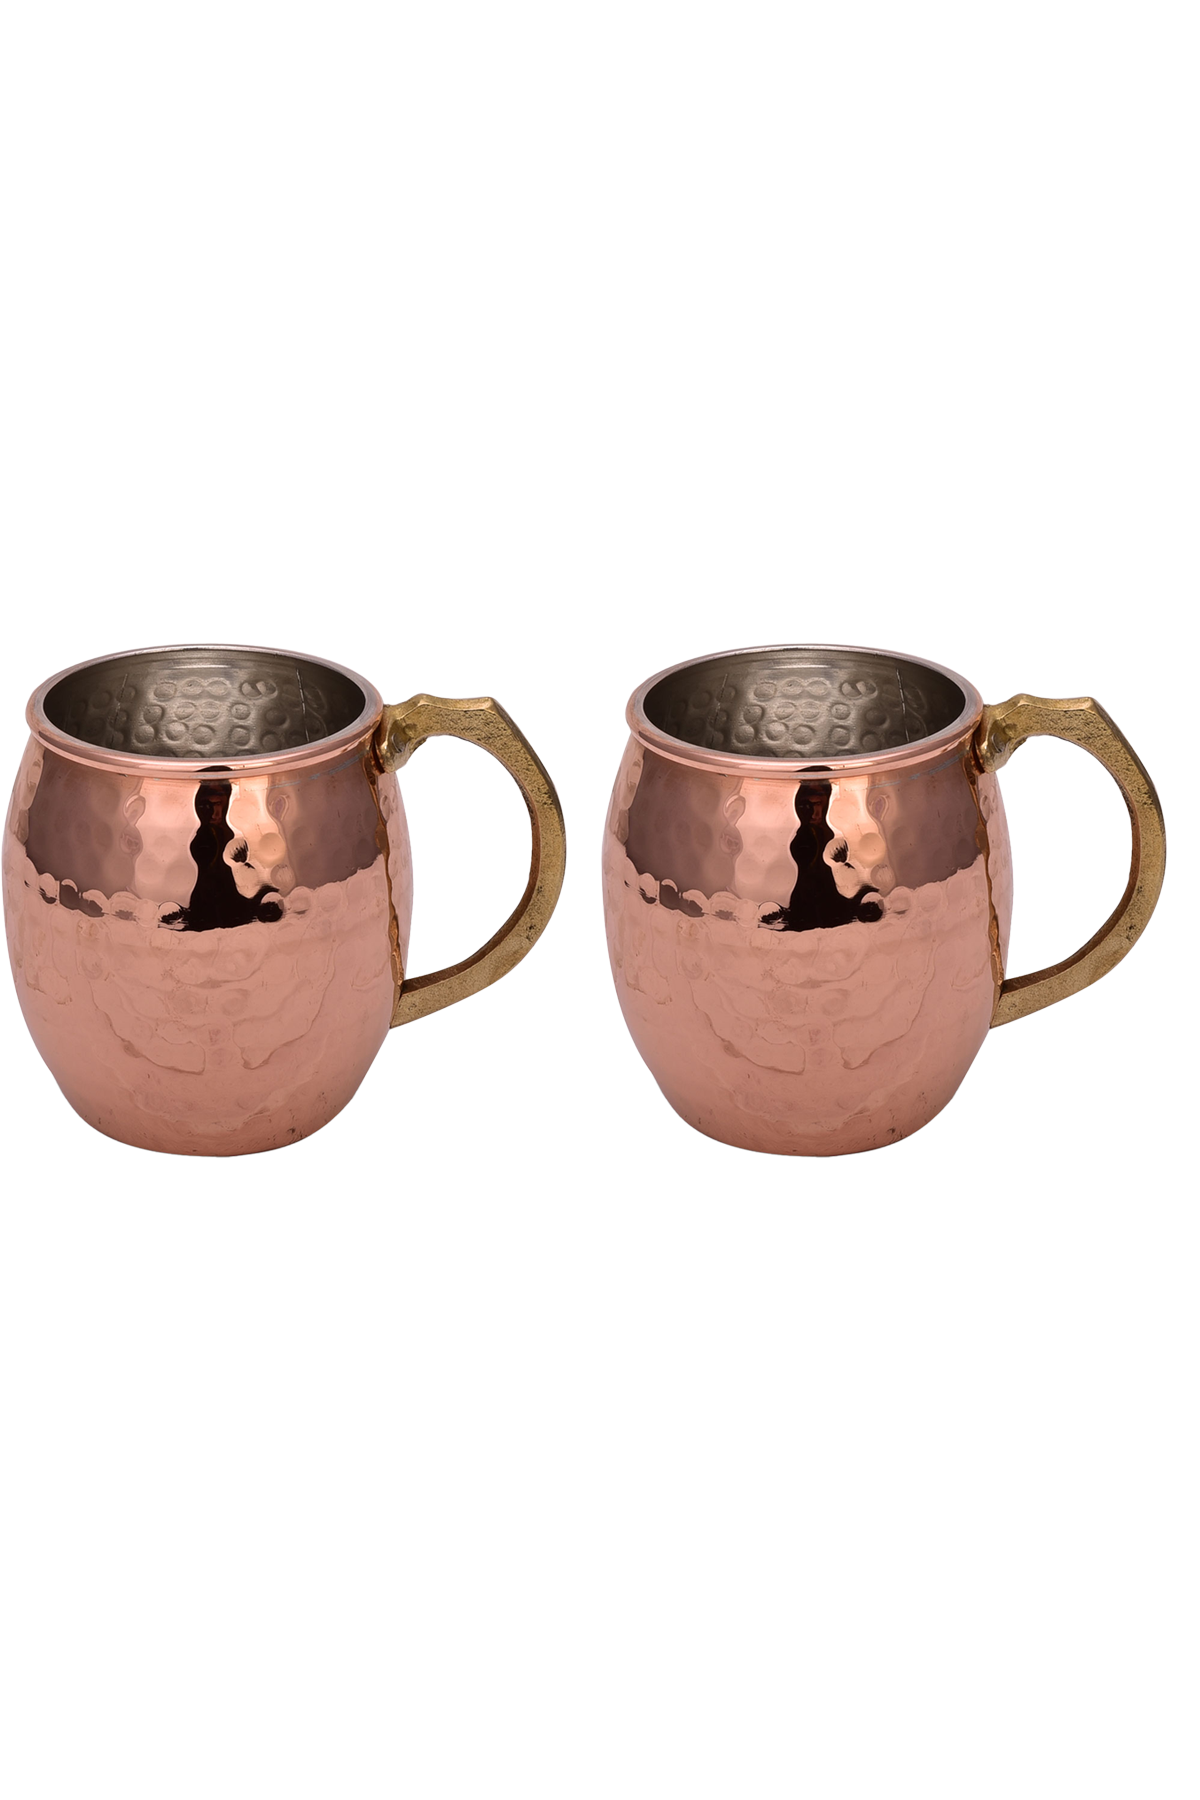 Copper Riva Mug Hand Forged Set of 2